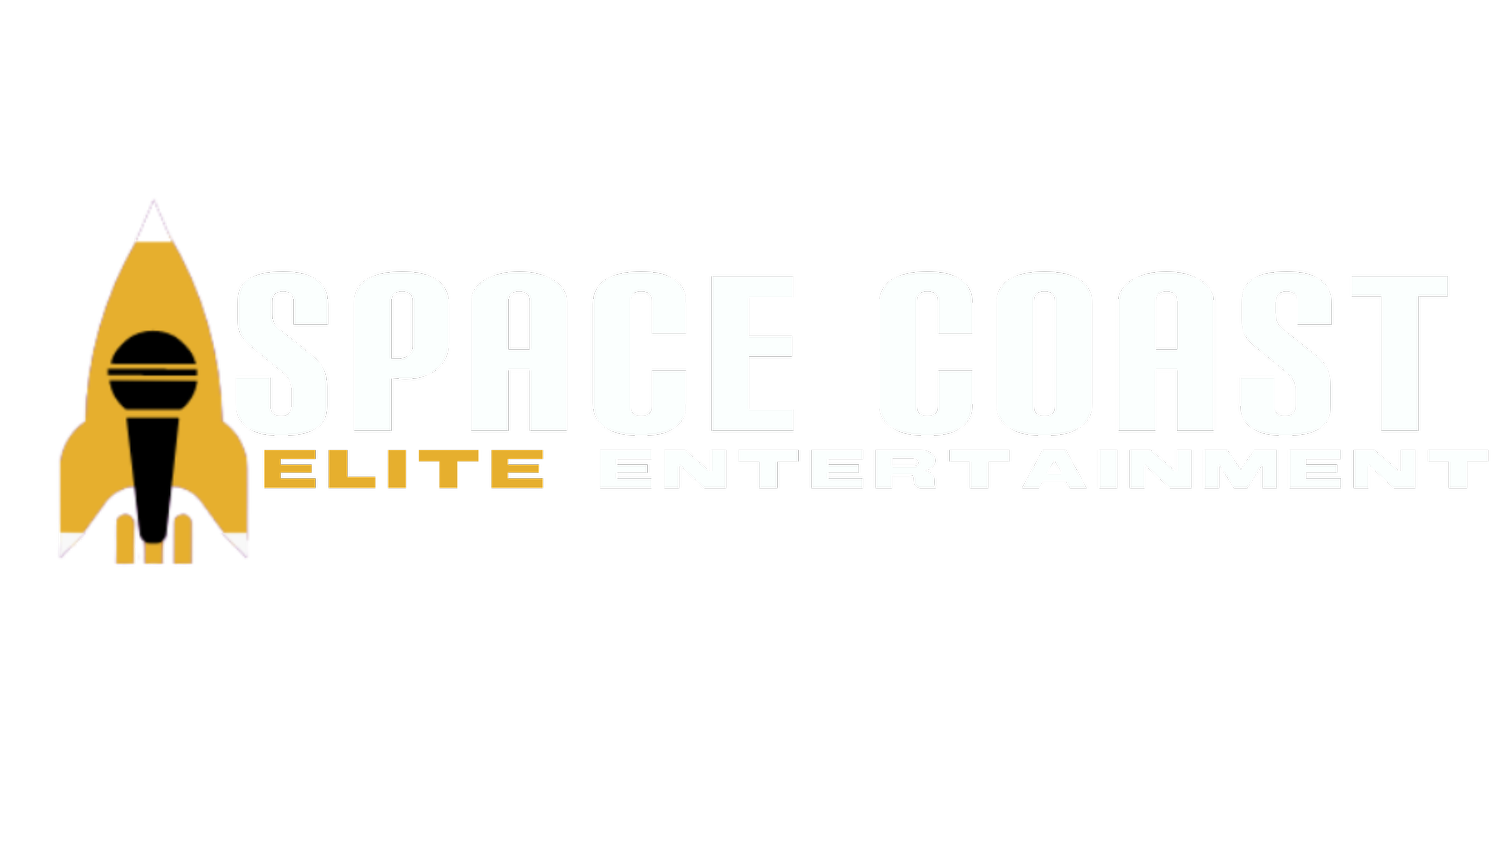 Space Coast Elite Entertainment